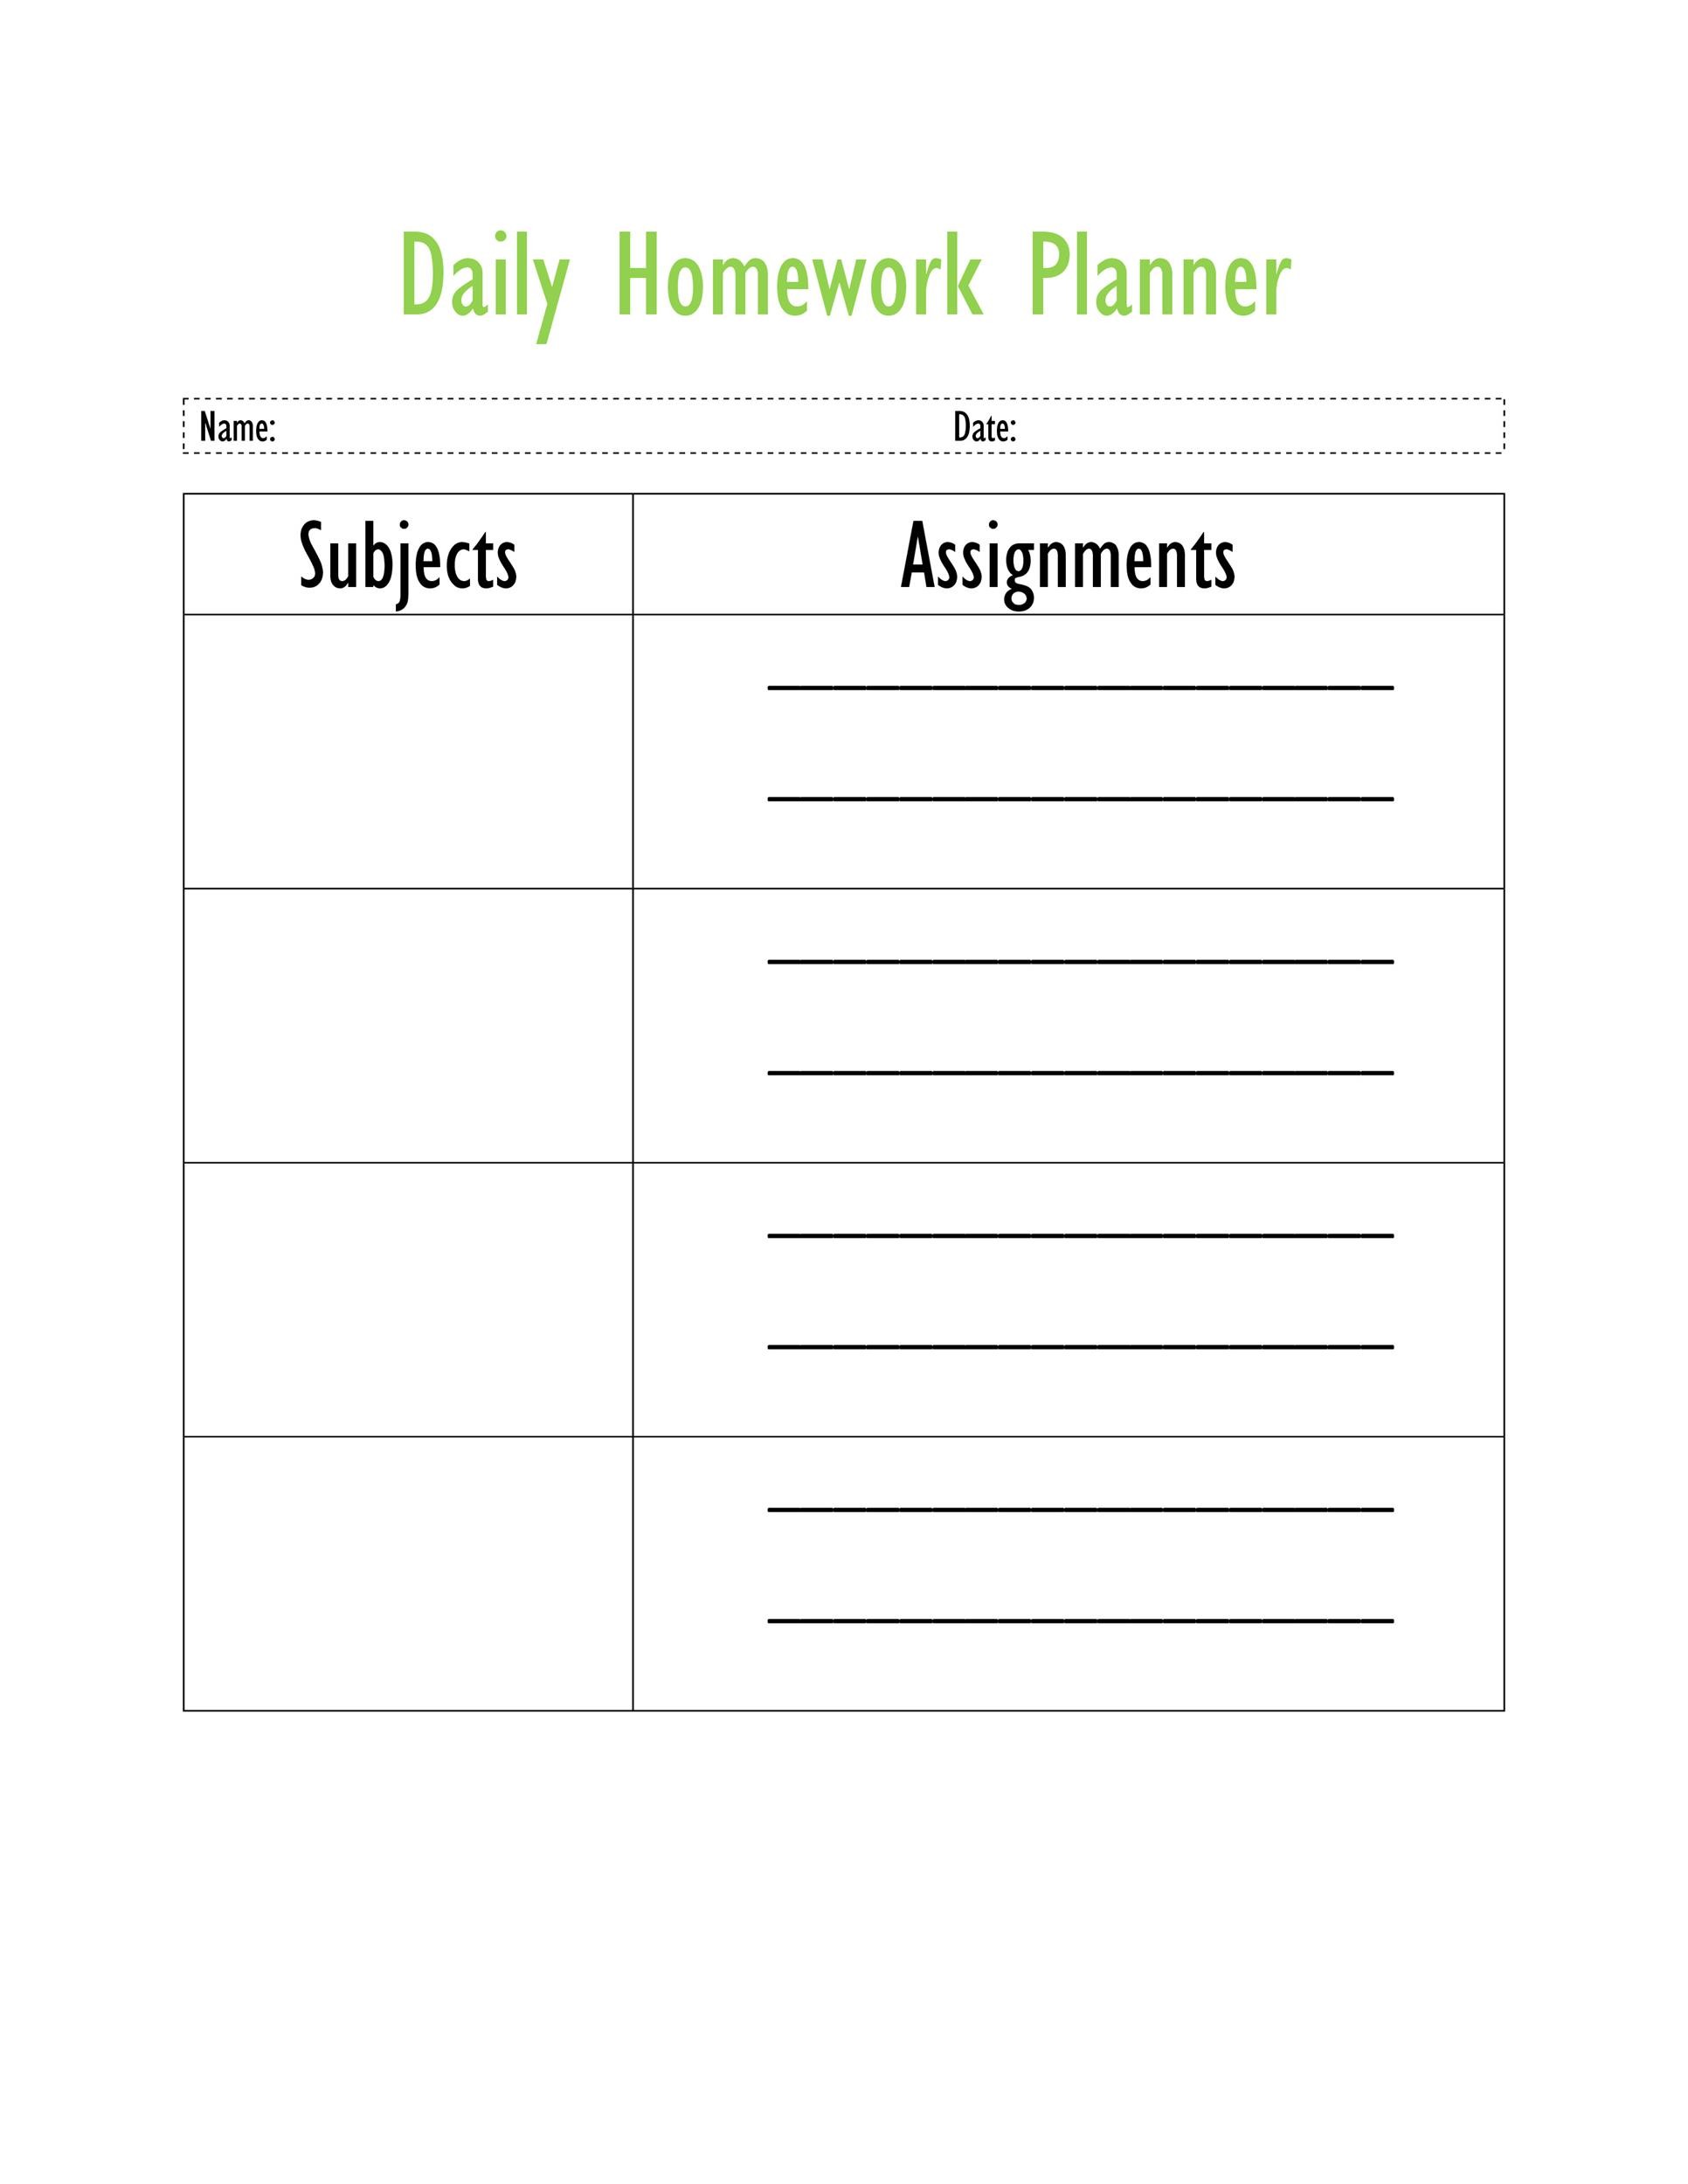 Free homework planner 16